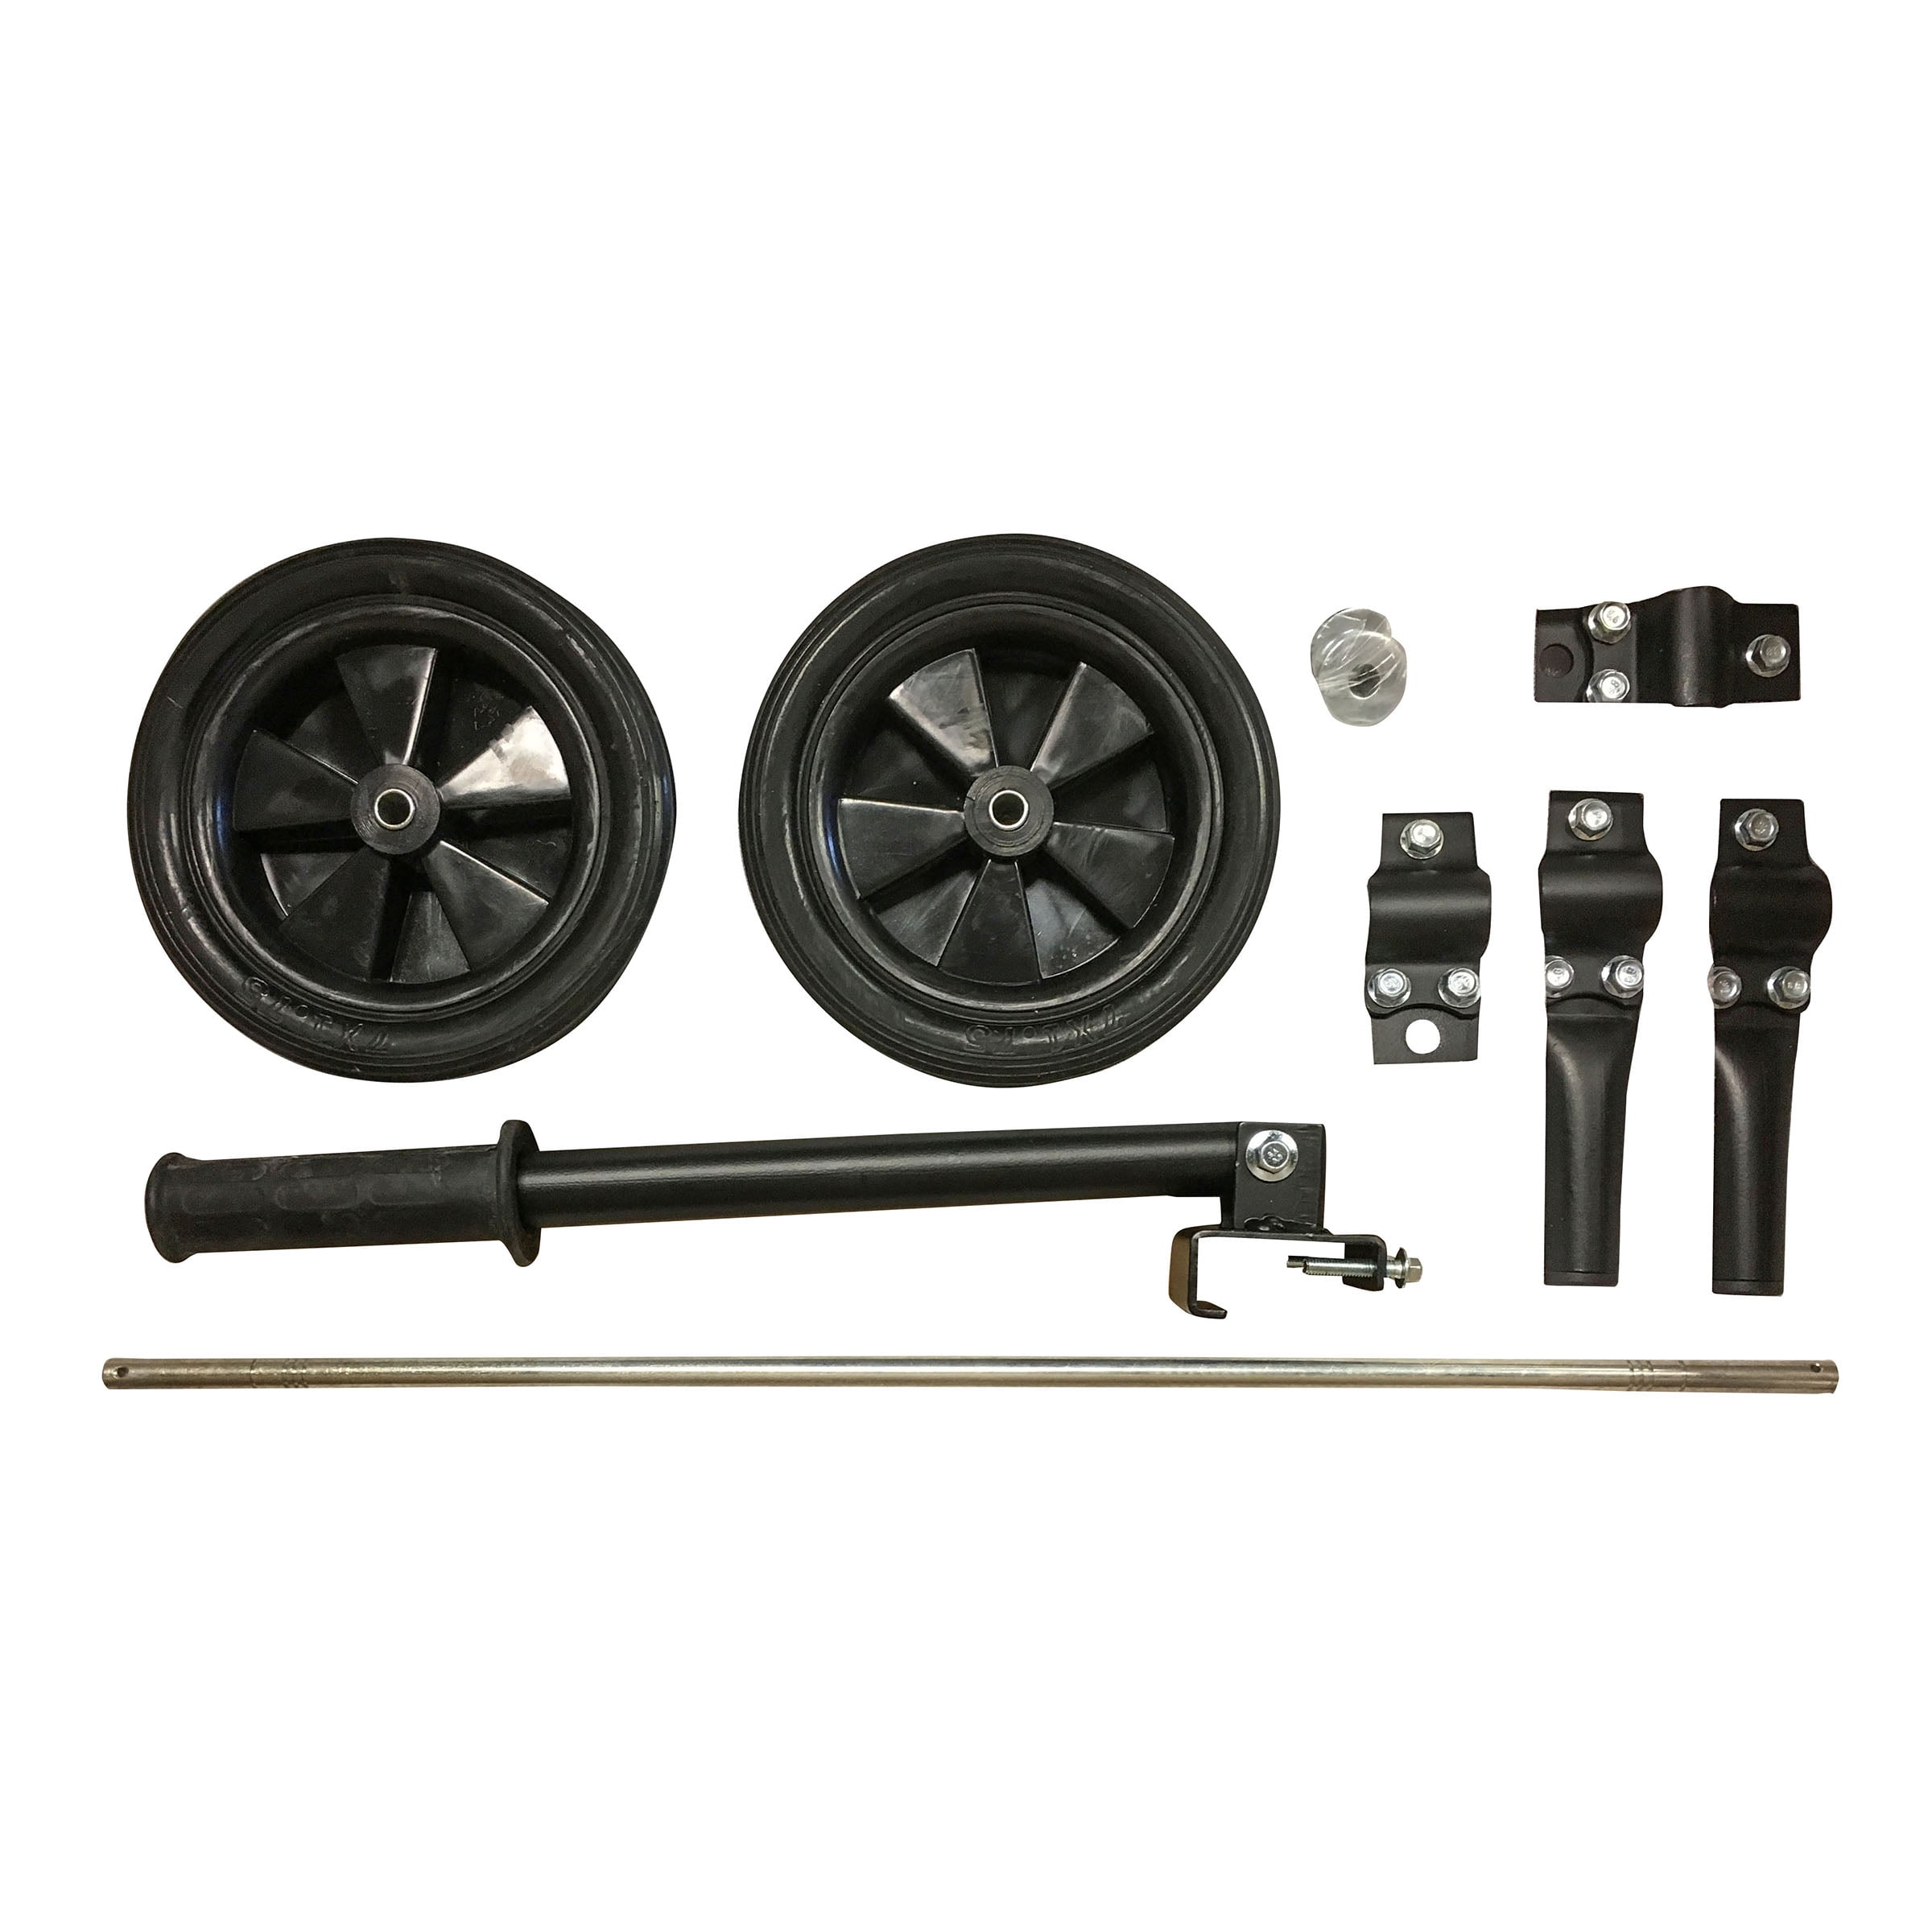 Buffalo Tools Genwhkit Generator Wheel Kit Assembly For 4000w Sportsman Generators, Black